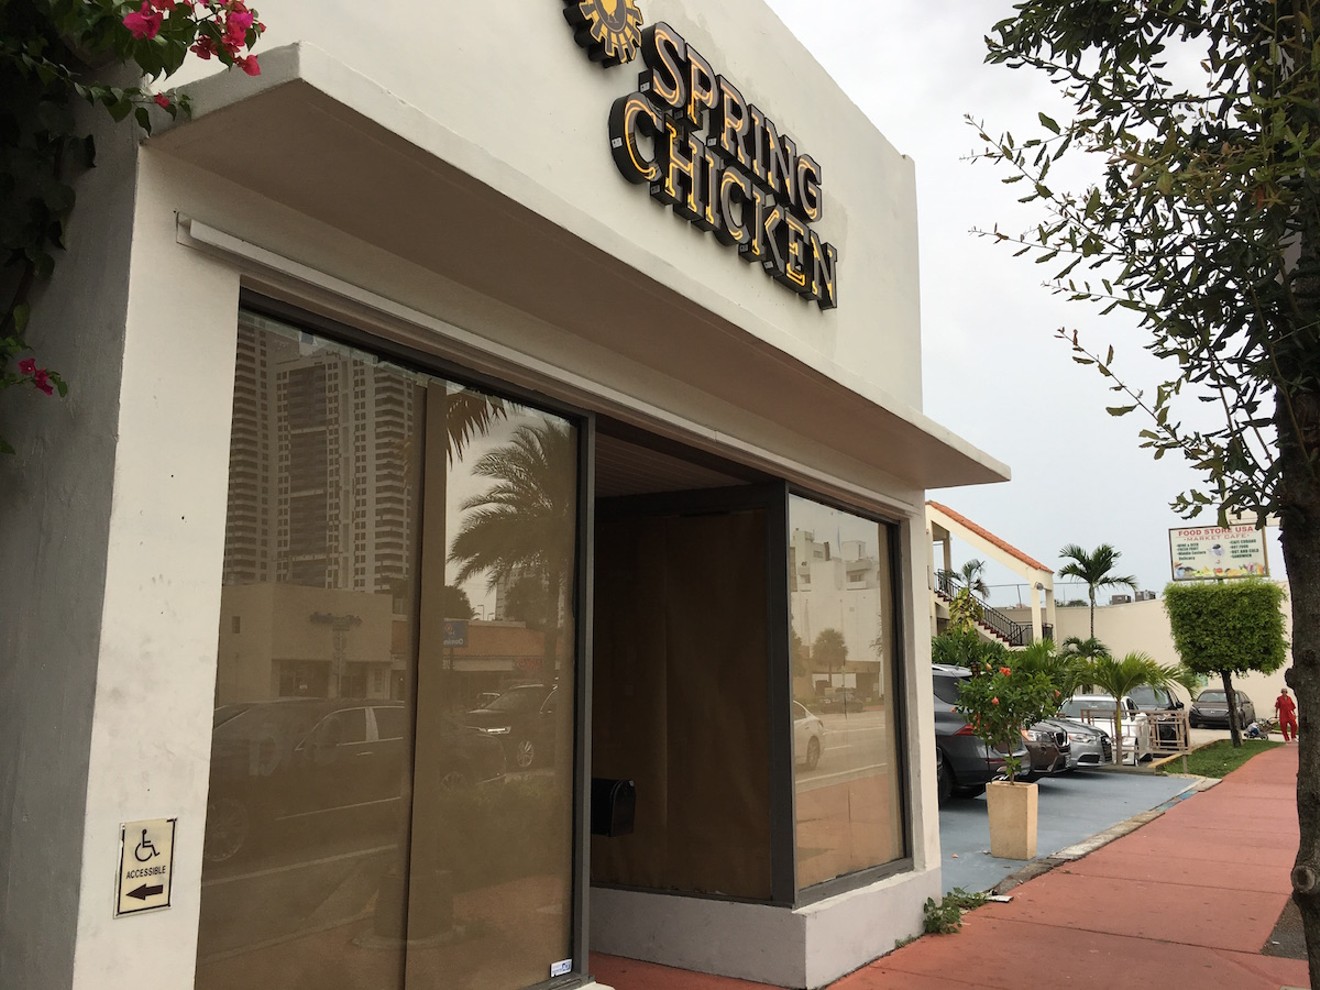 Miami Beach's Spring Chicken has closed.